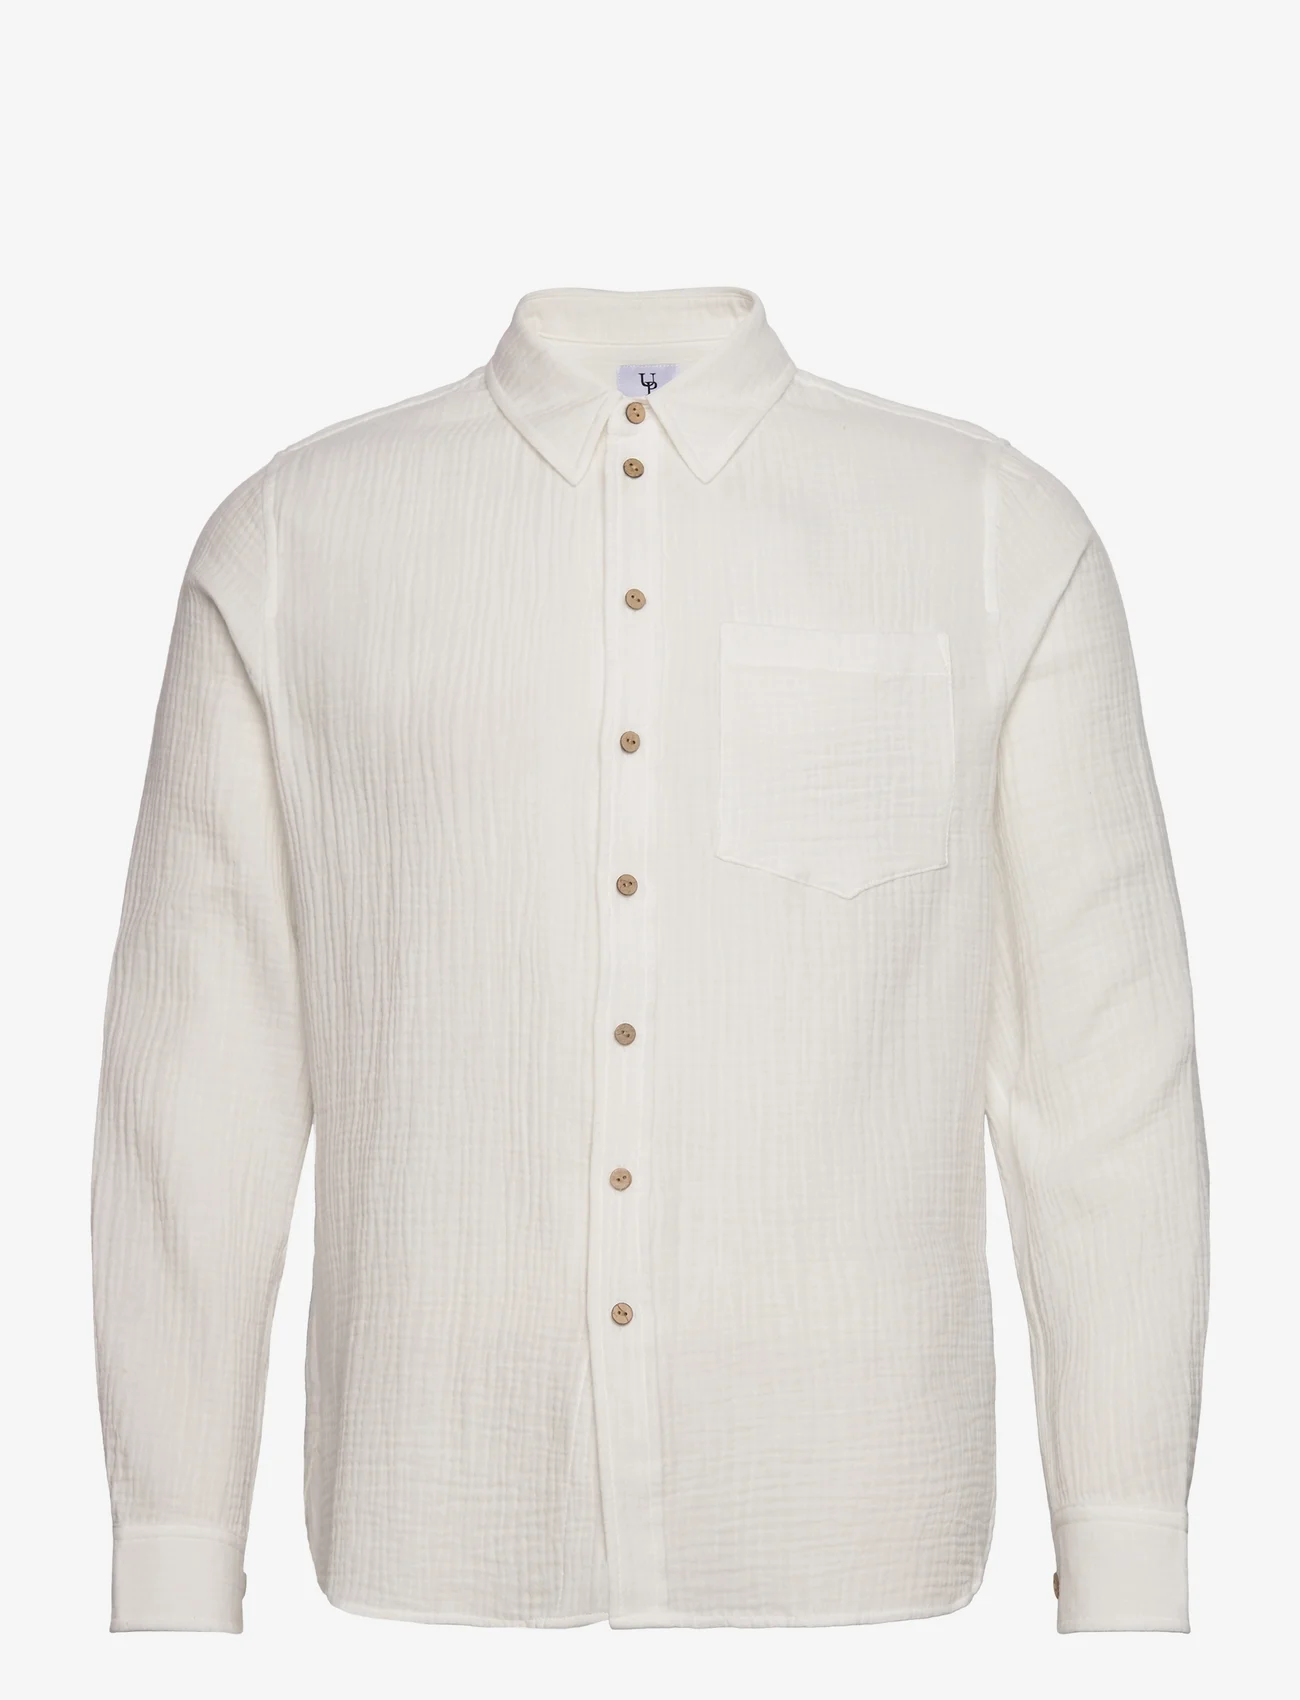 Urban Pioneers - Clive Shirt - basic skjorter - white - 0